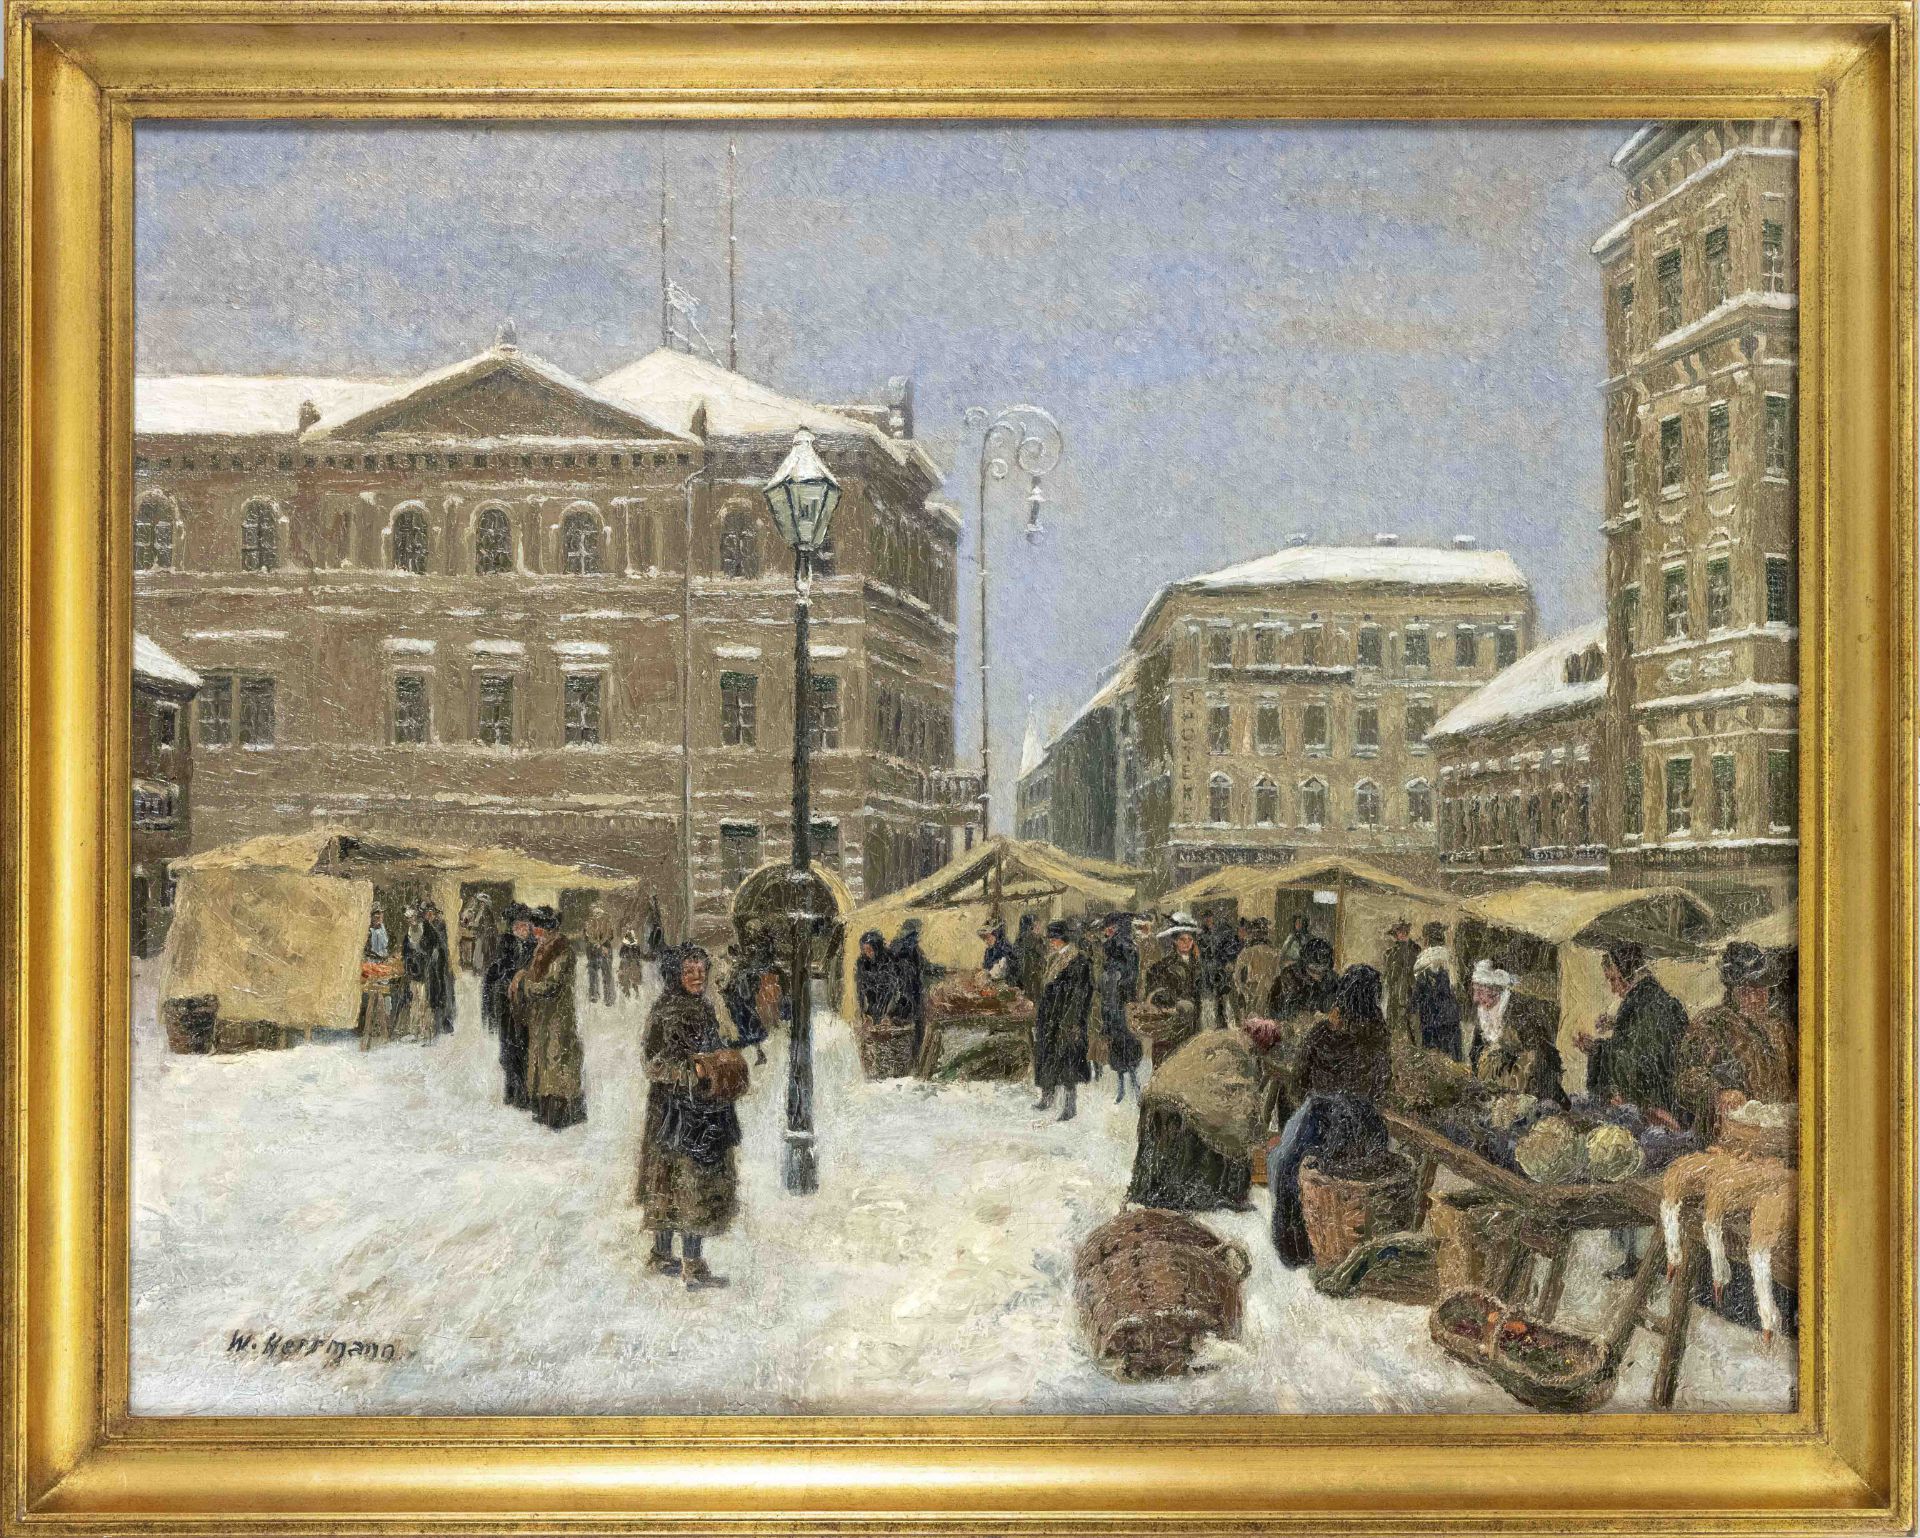 W. Herrmann, German artist c. 1900, urban market scene in the snow, oil on canvas, signed lower